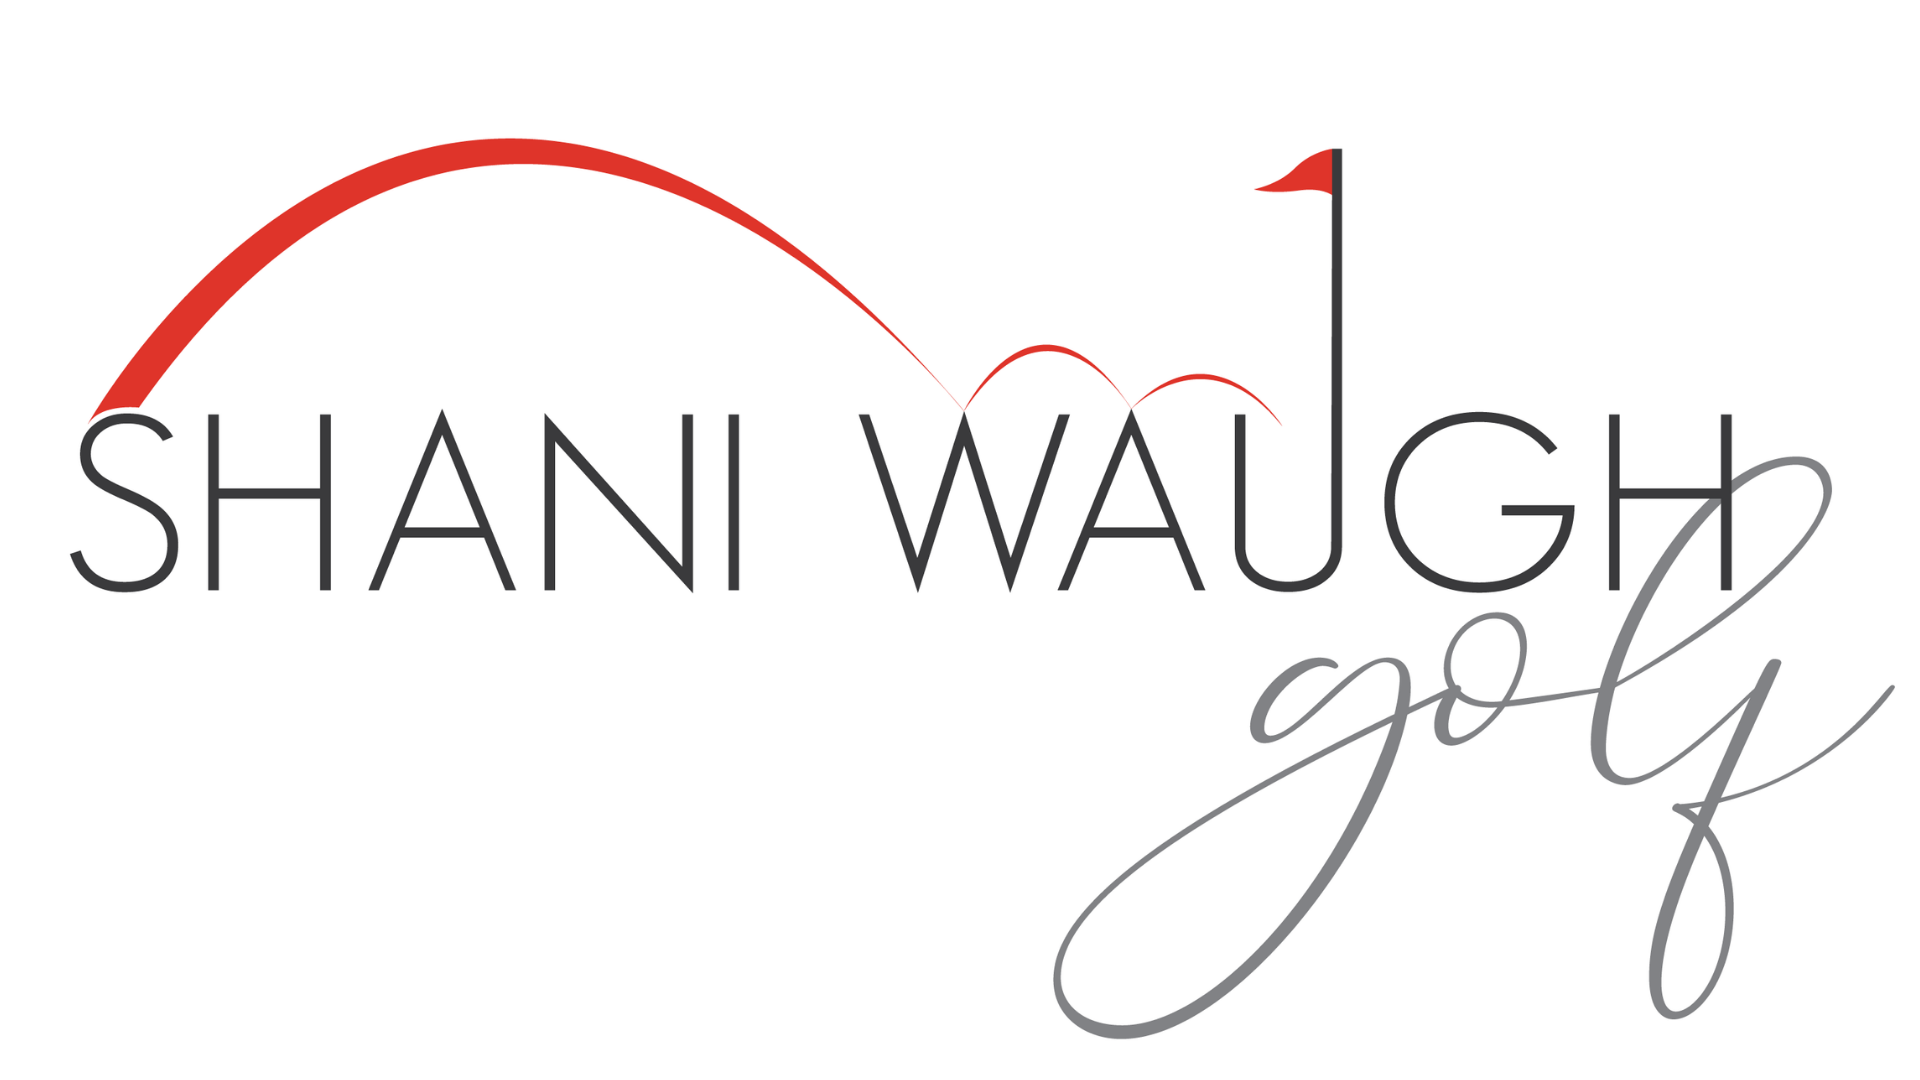 Shani Waugh Golf